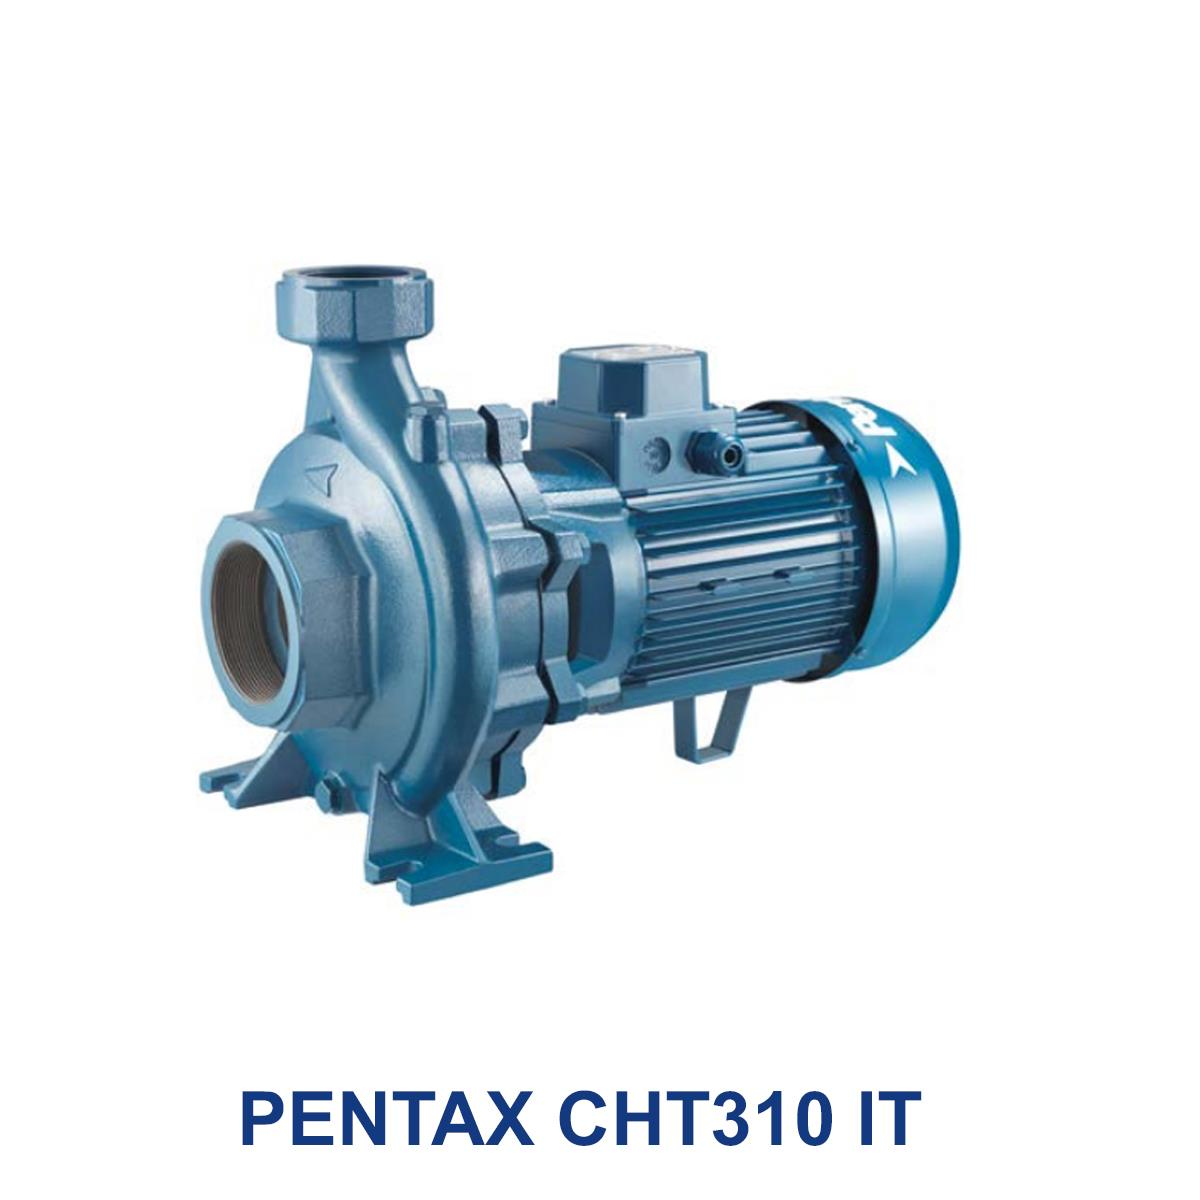 PENTAX-CHT310-IT